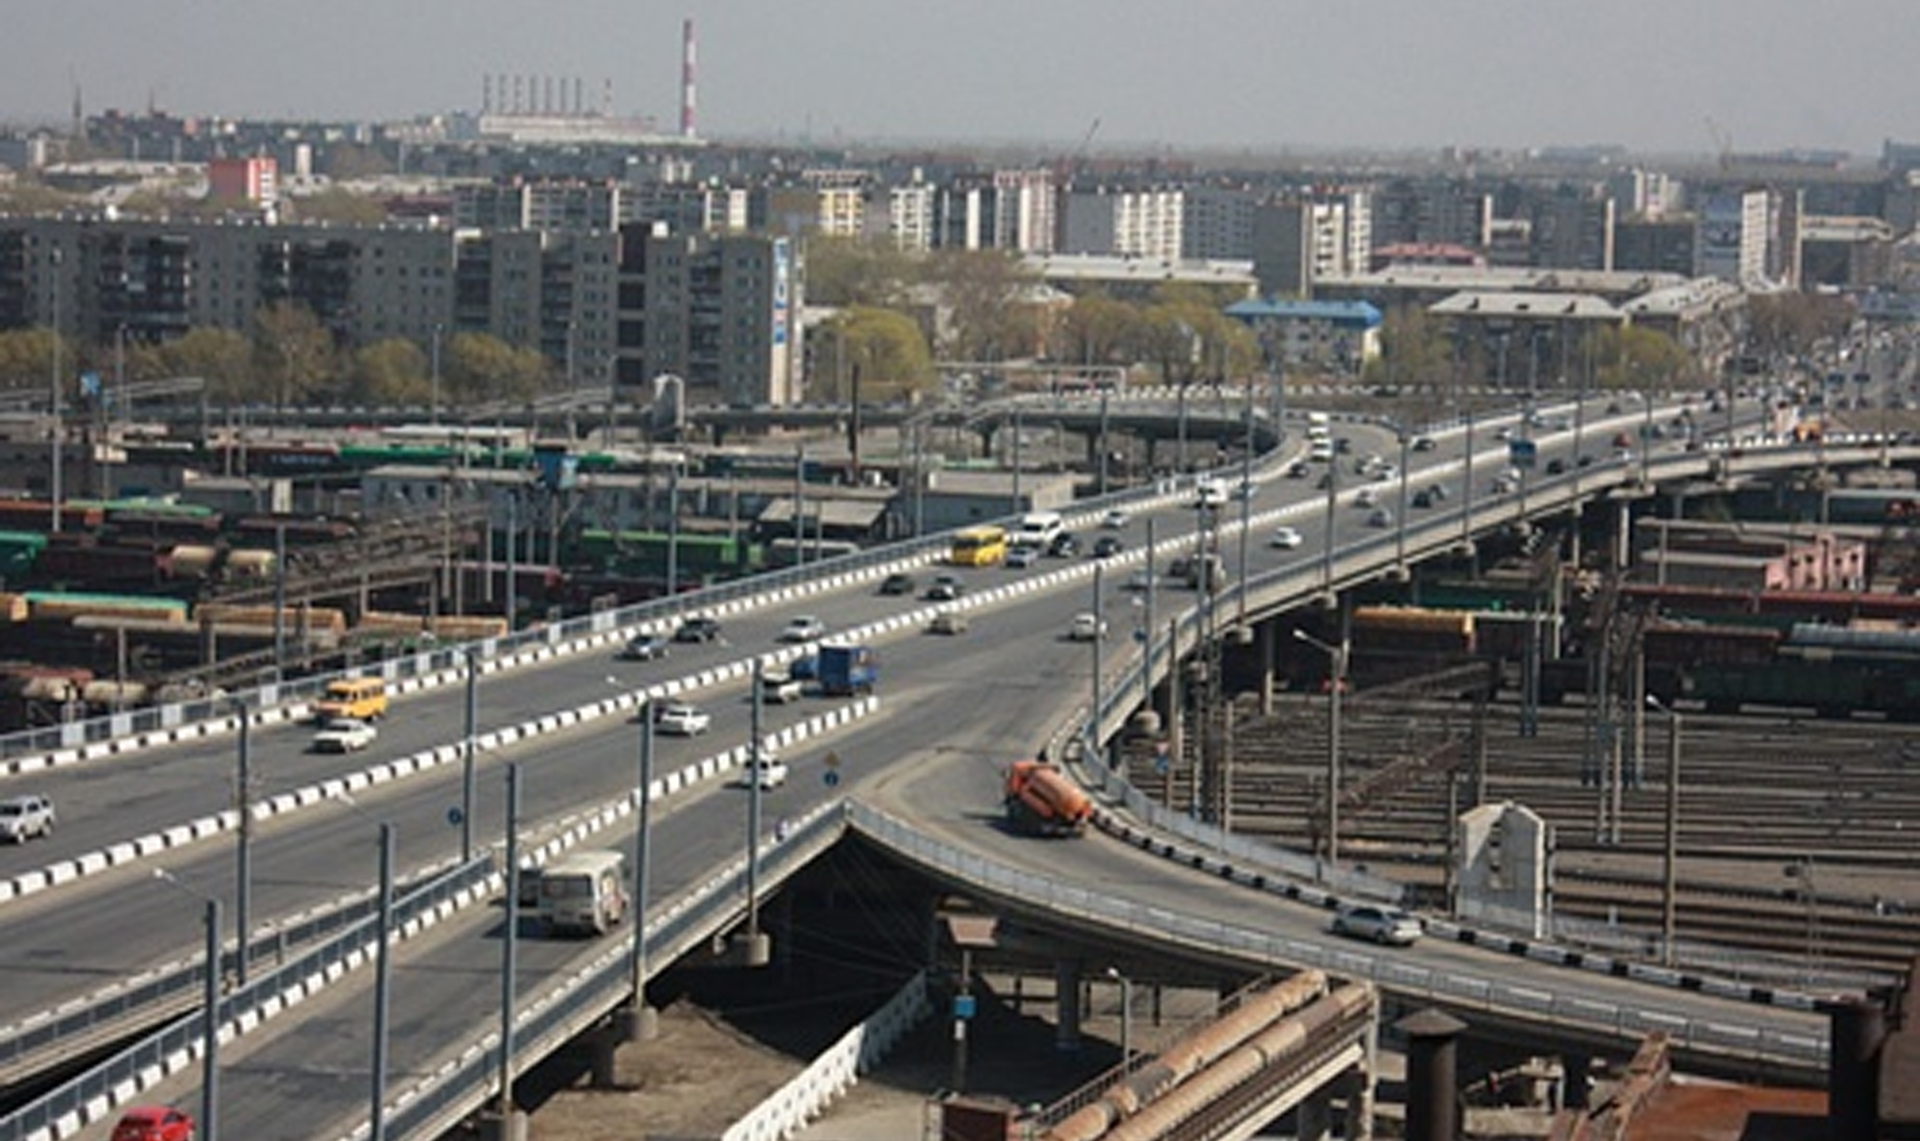 мост в ленинский район